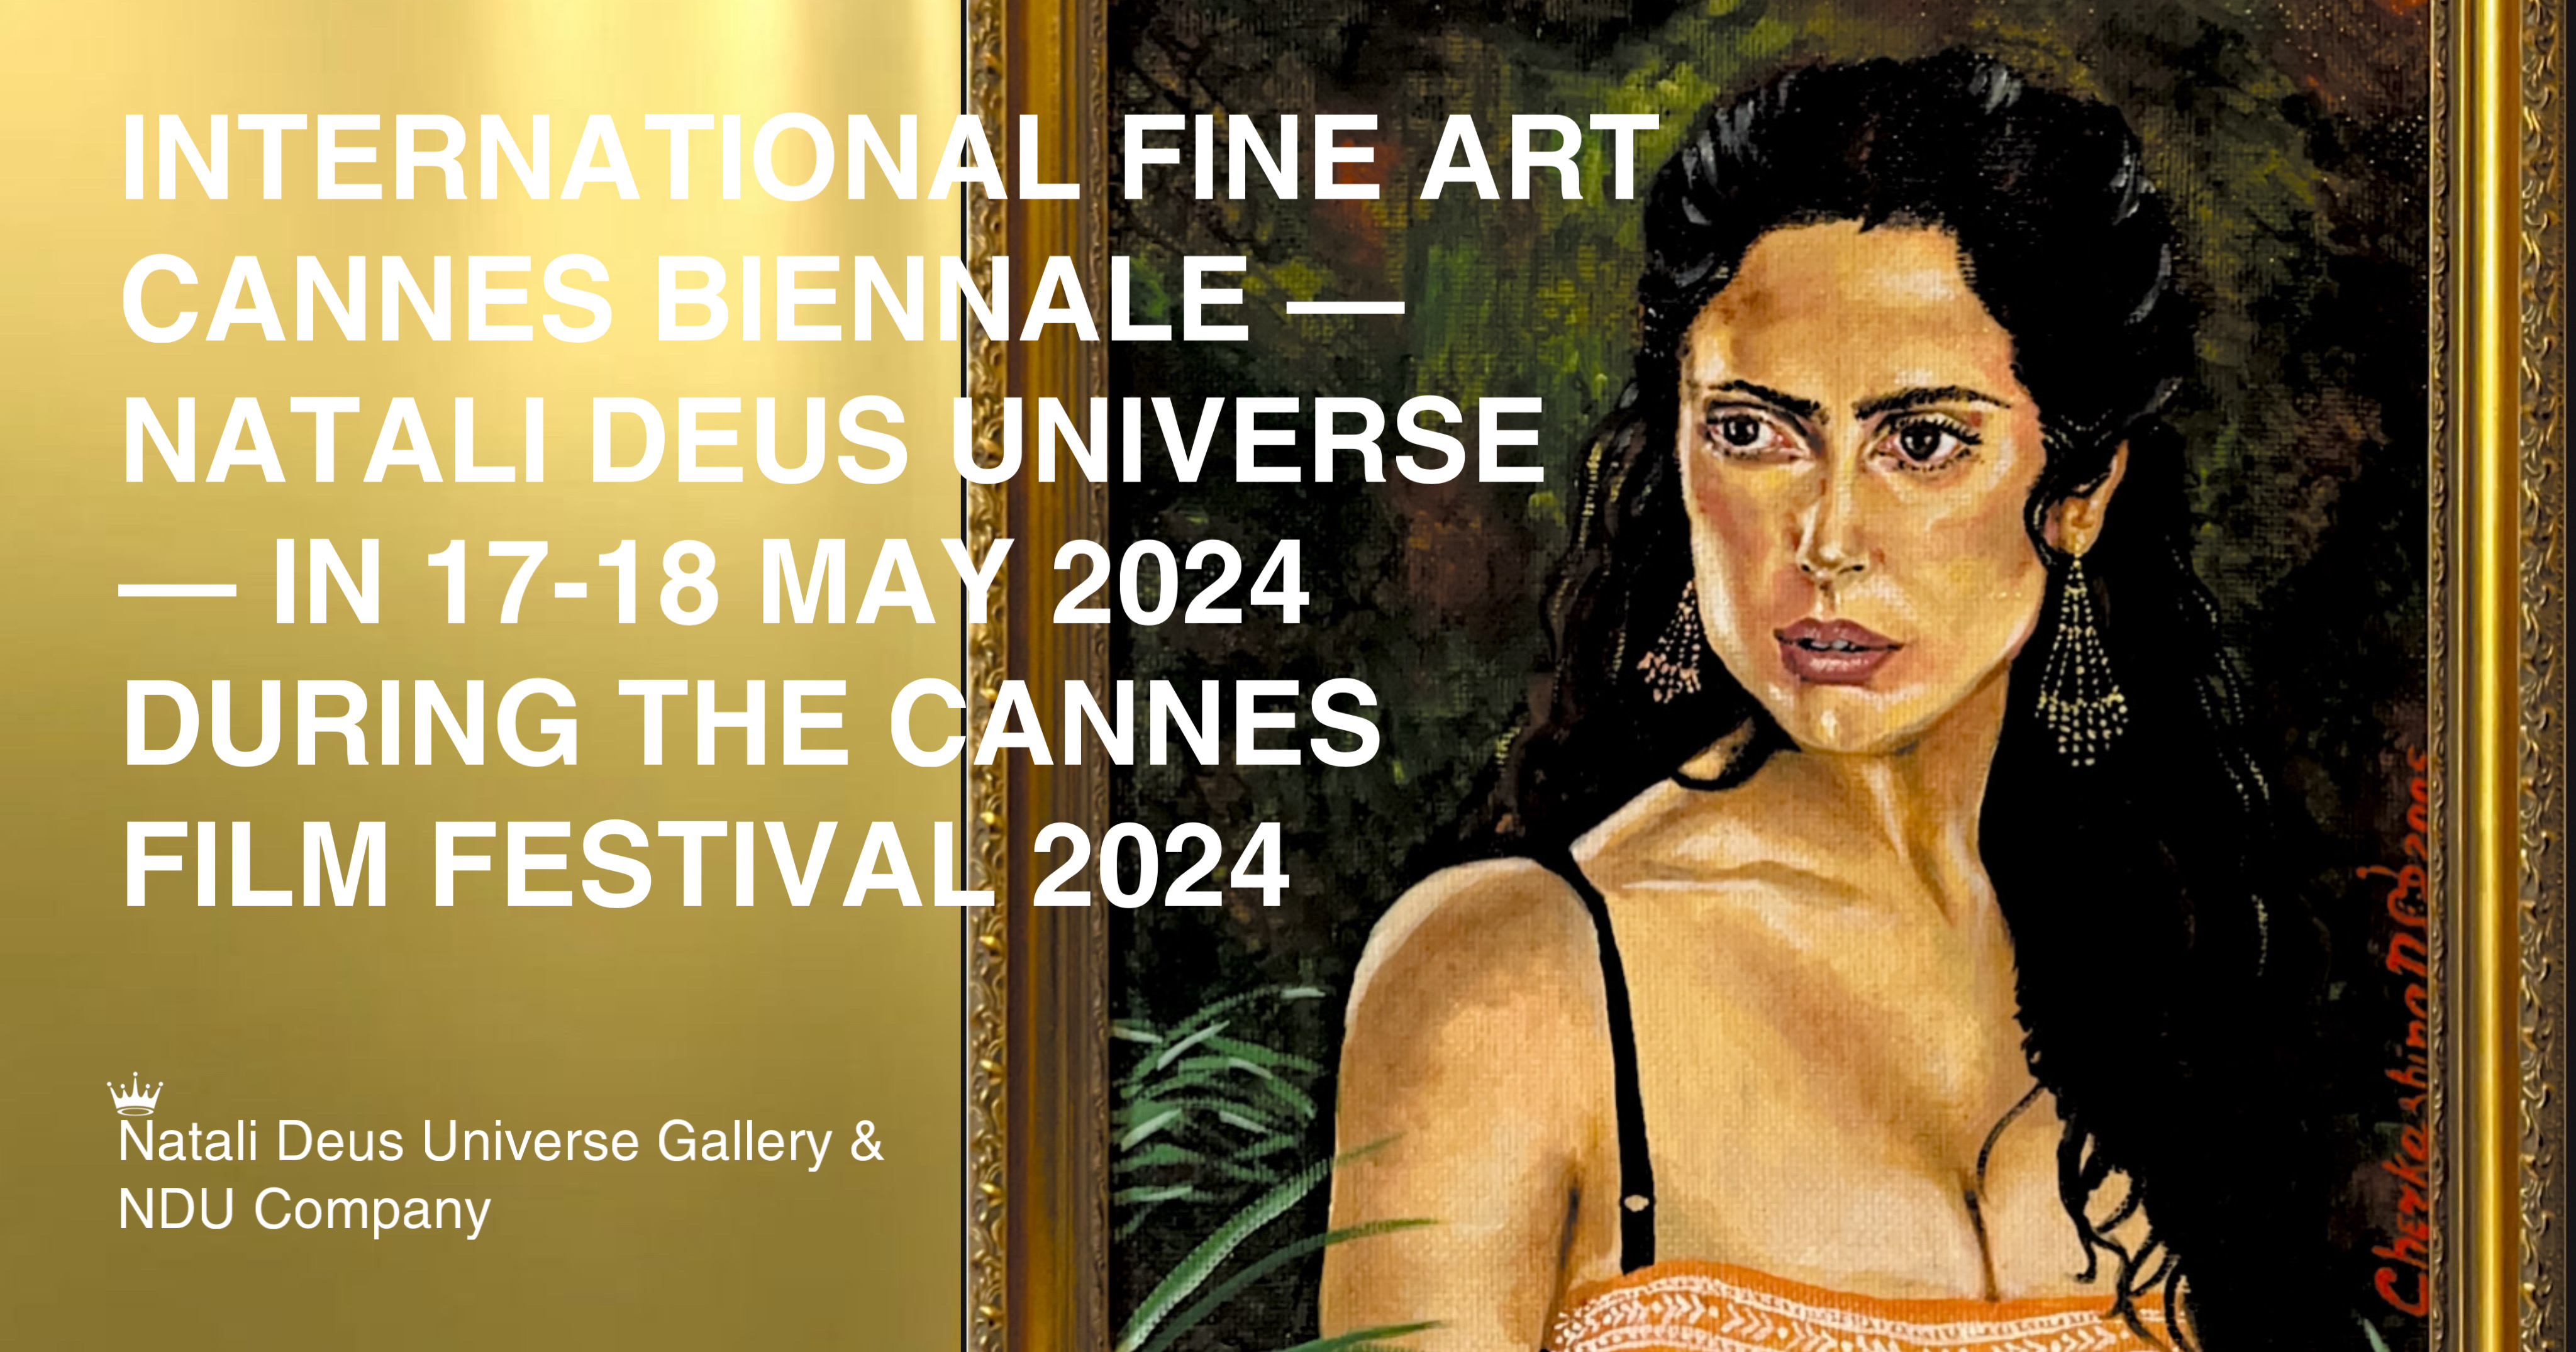 Natali Deus Universe News - International Fine Art Cannes Biennale - Natali Deus Universe - in 17-18 may 2024 during the Cannes Film Festival 2024